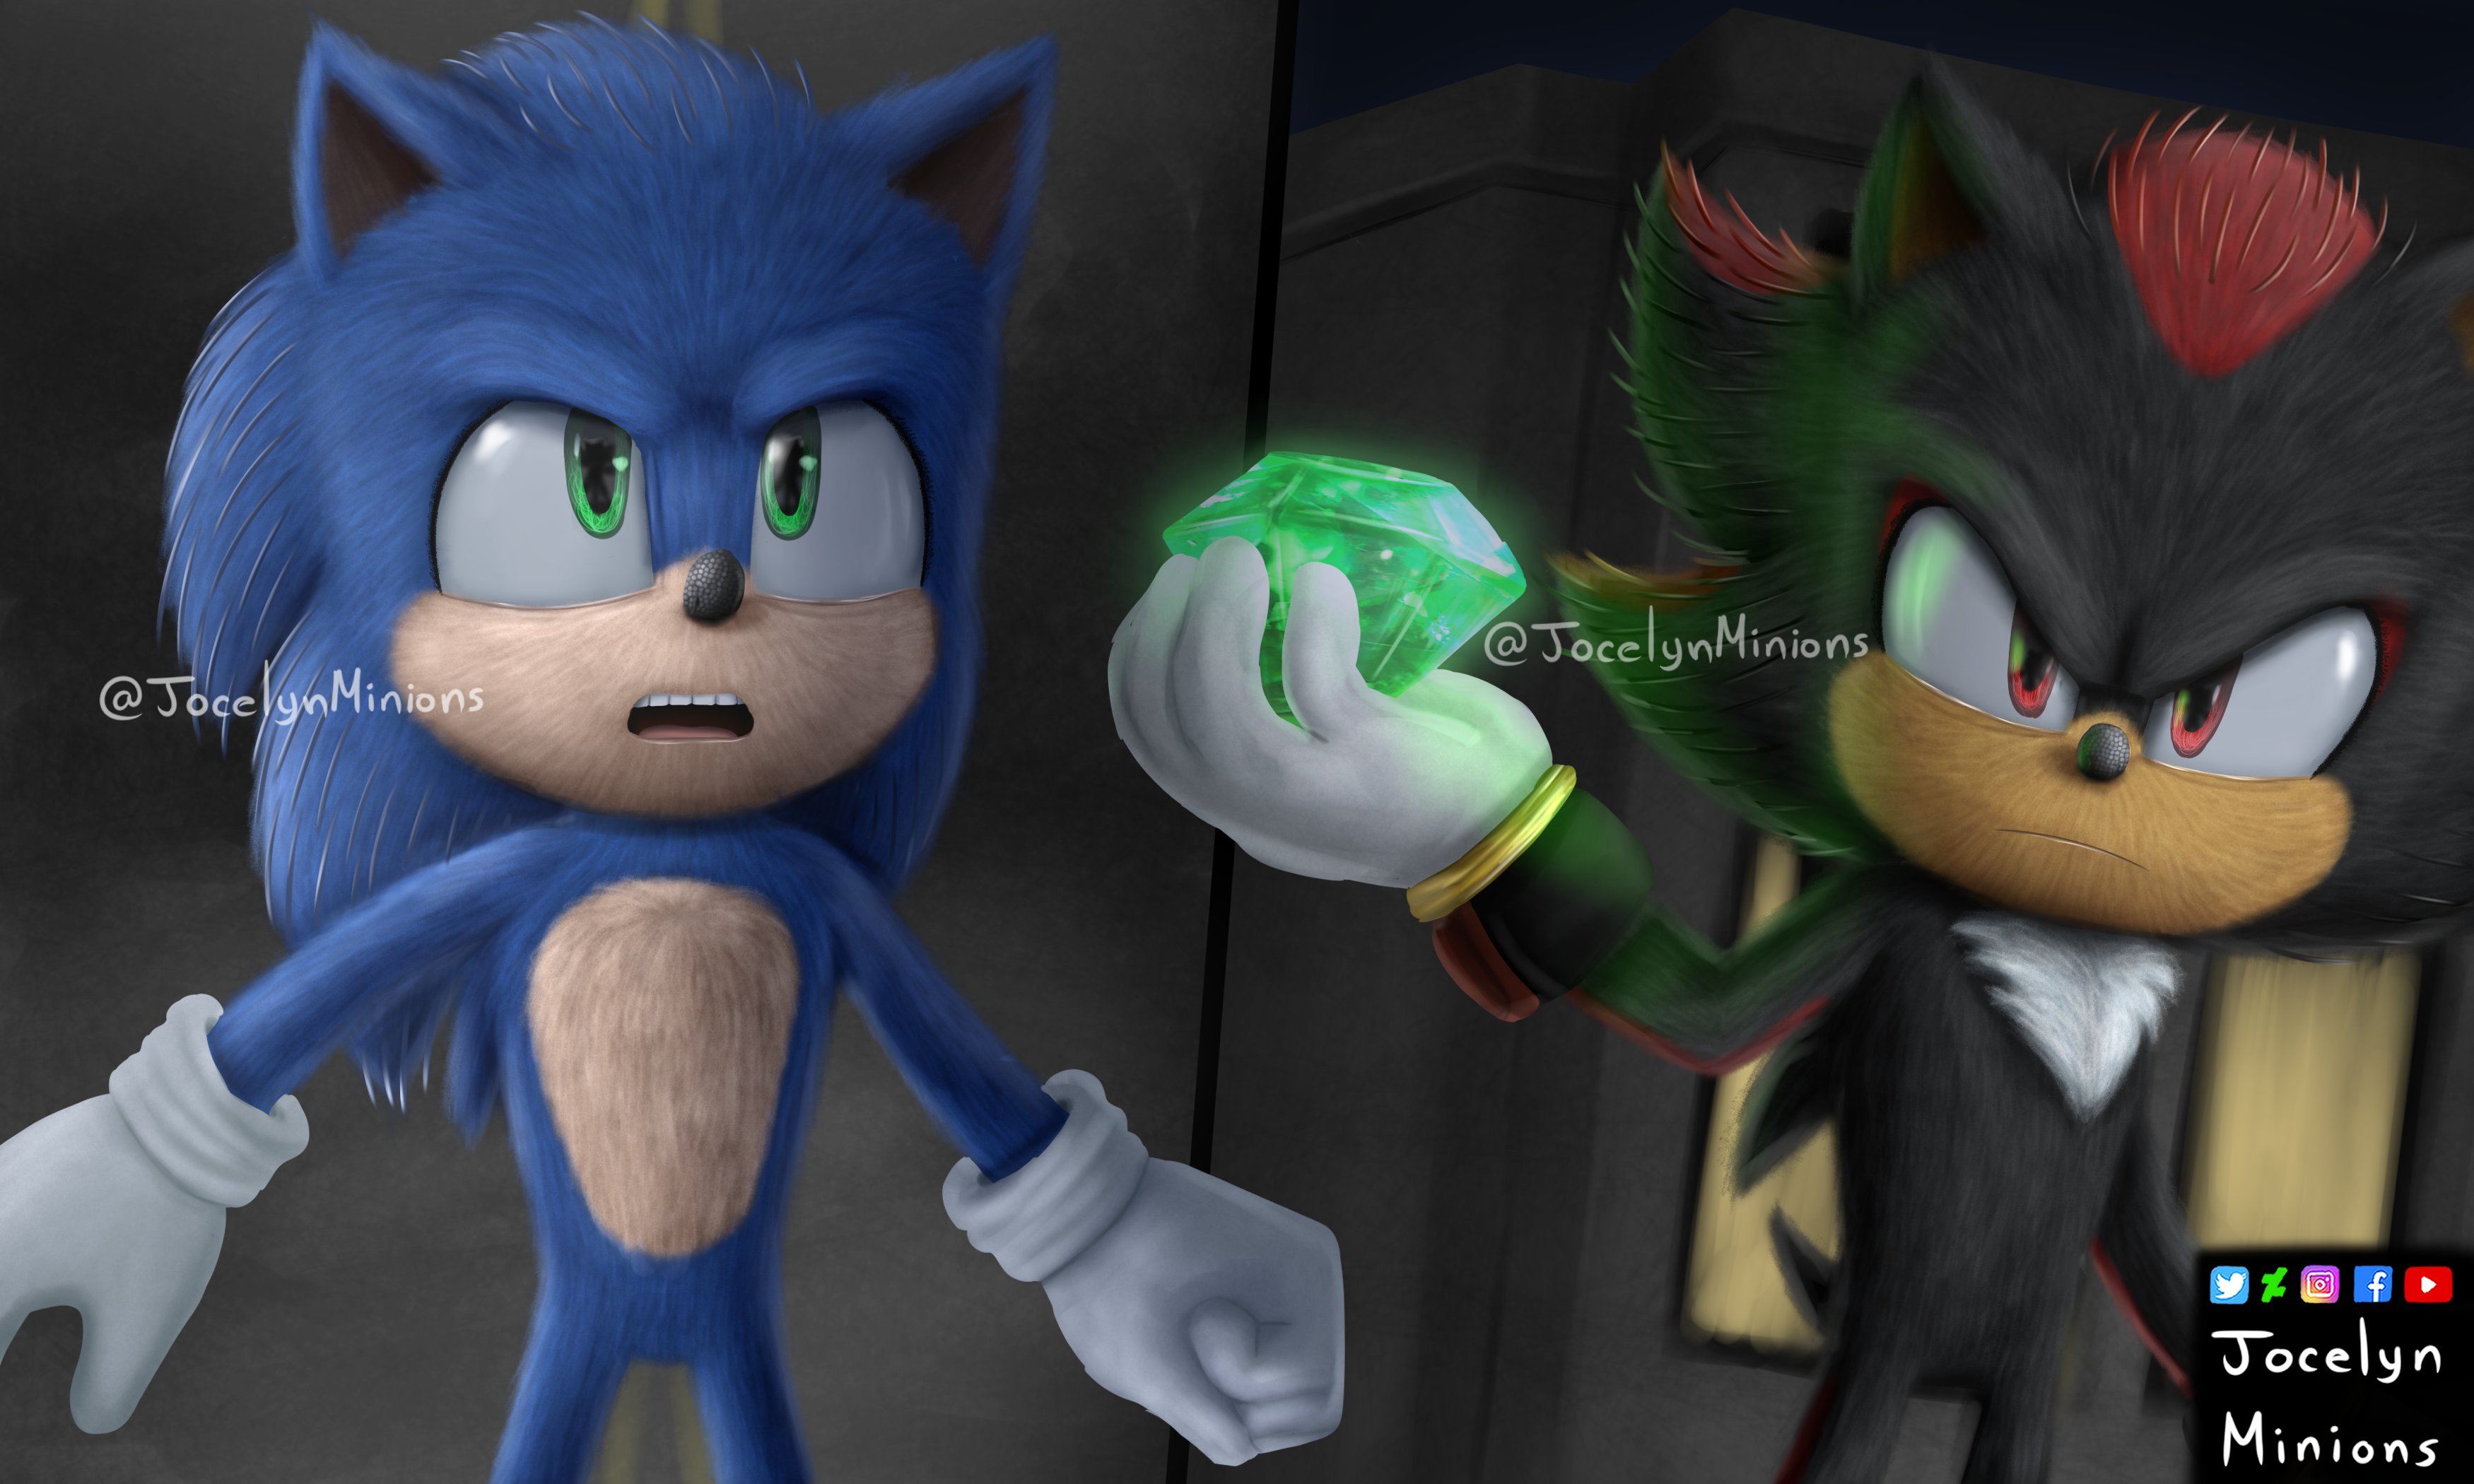 Sonic and Shadow - Sonic Adventure 2 by ShadowLifeman on DeviantArt